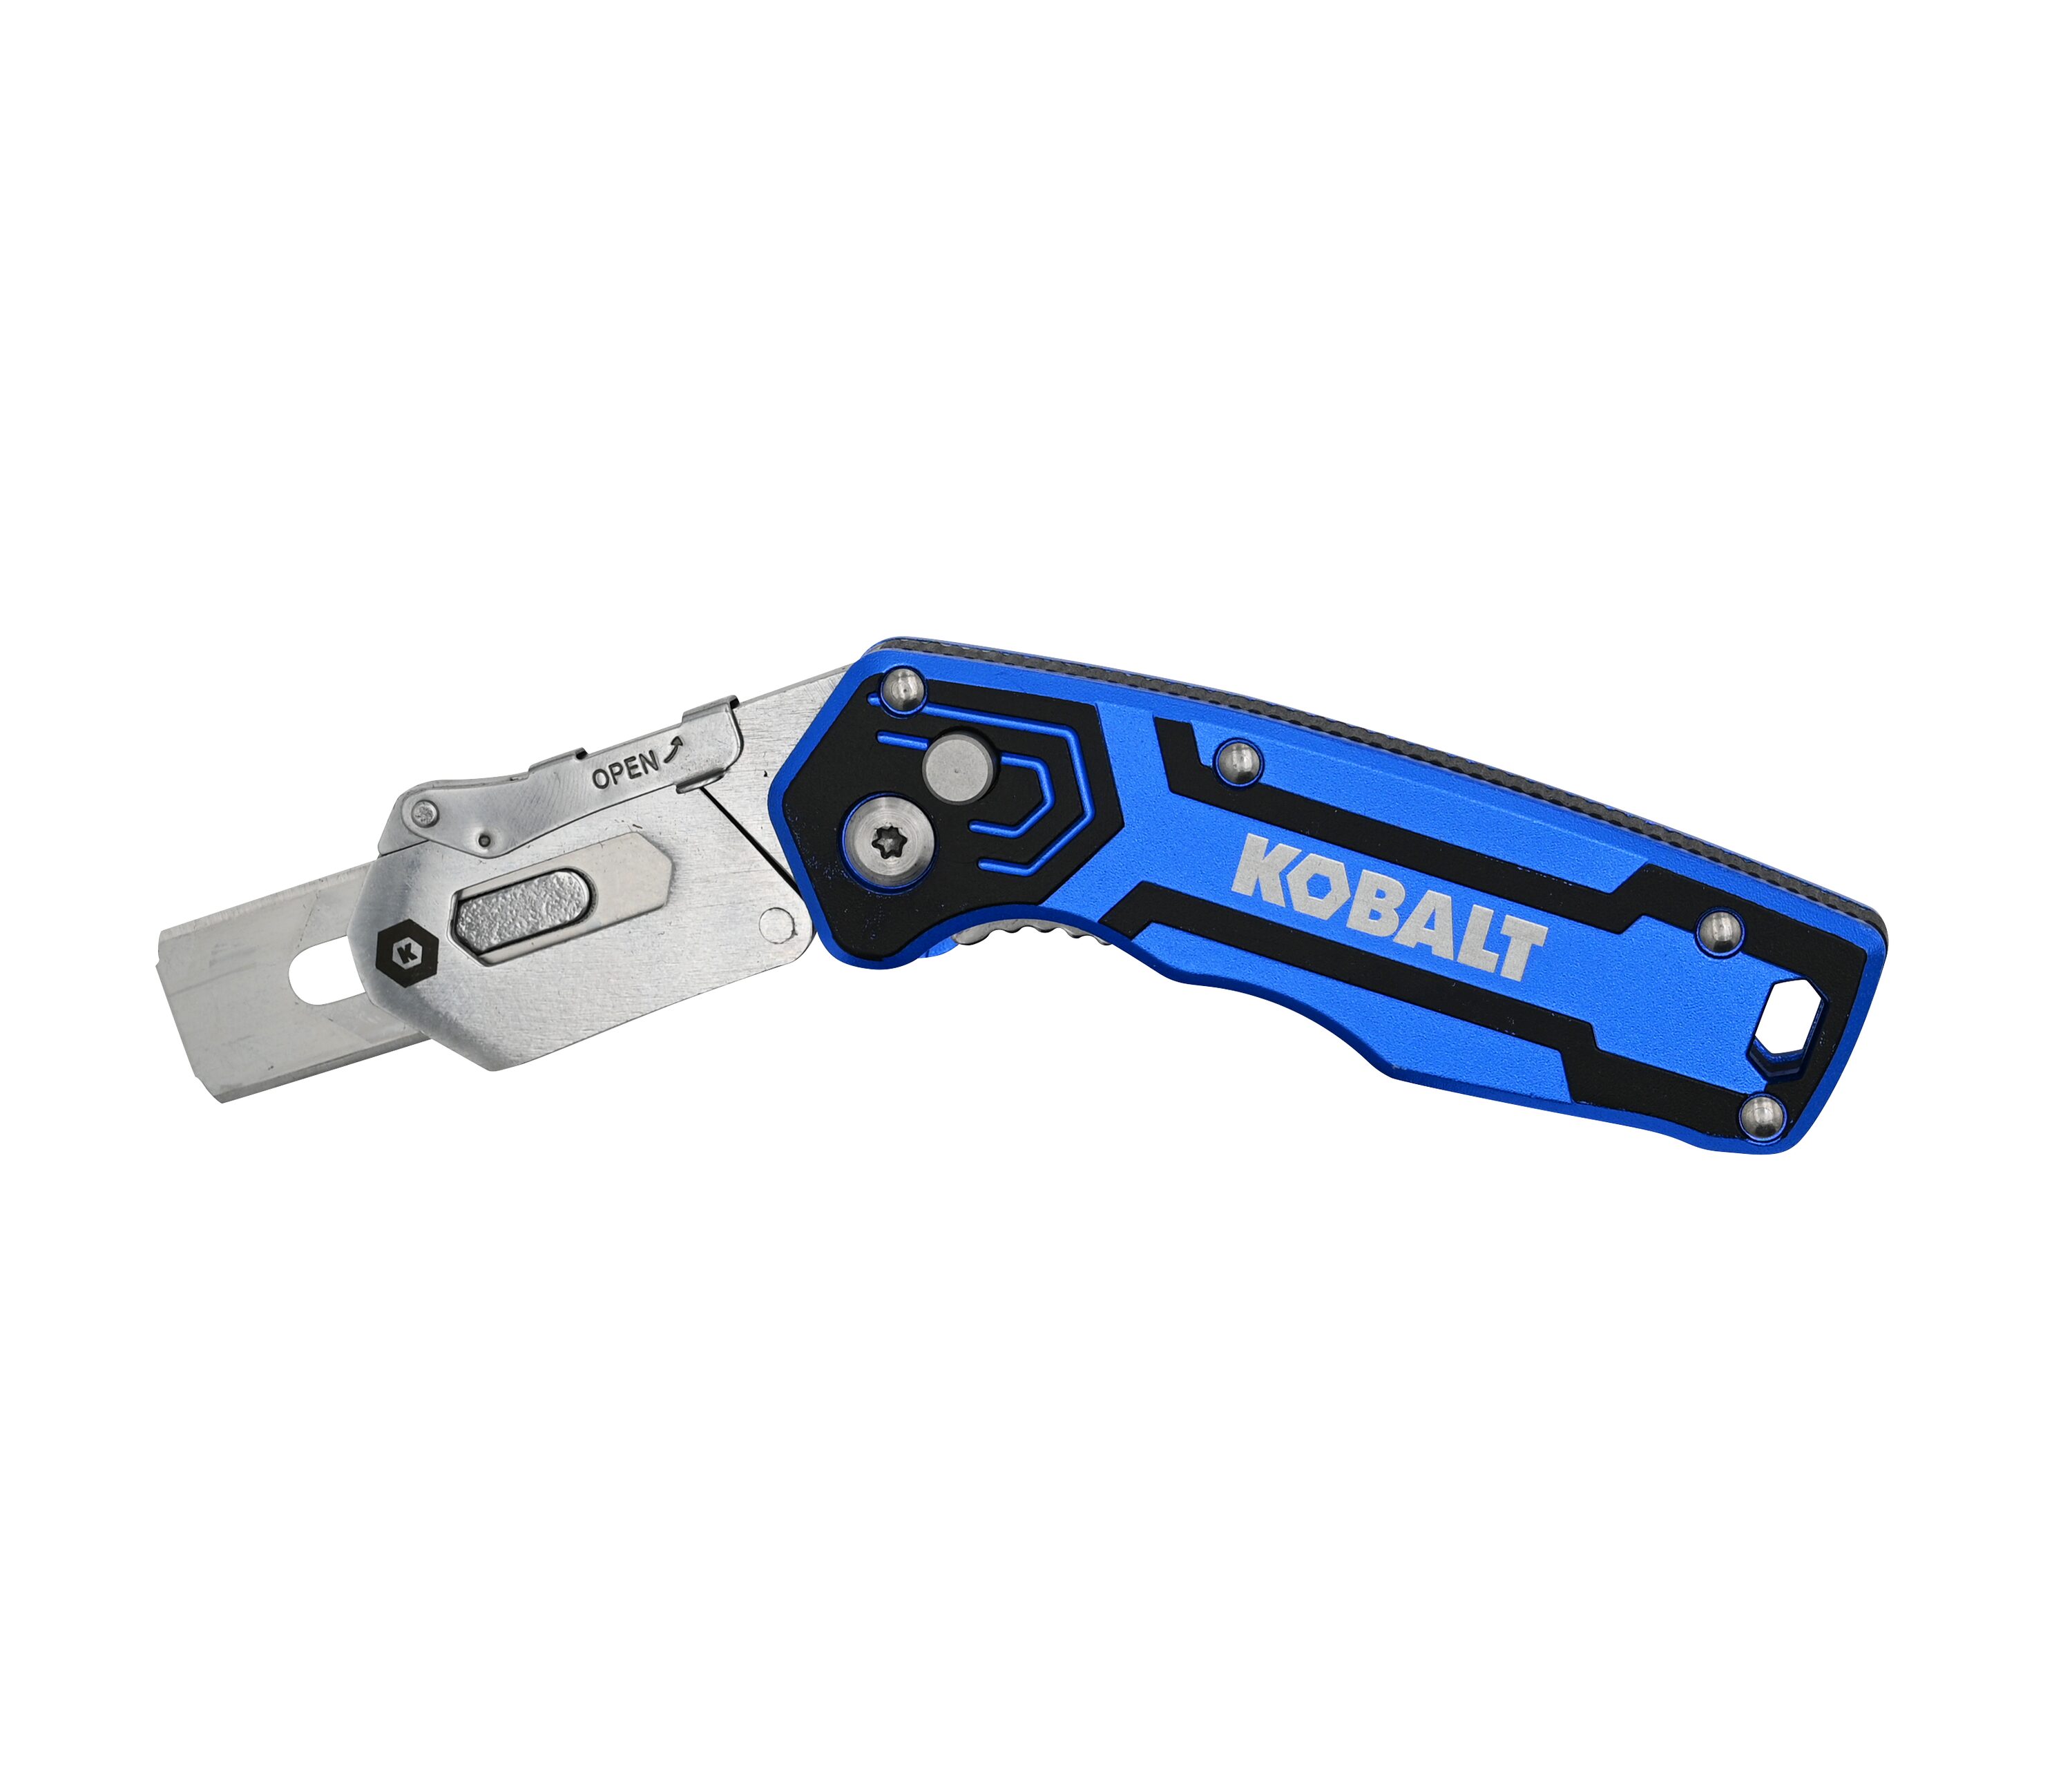 Carpet 11-Blade Folding Utility Knife with On Tool Blade Storage | - Kobalt 54357